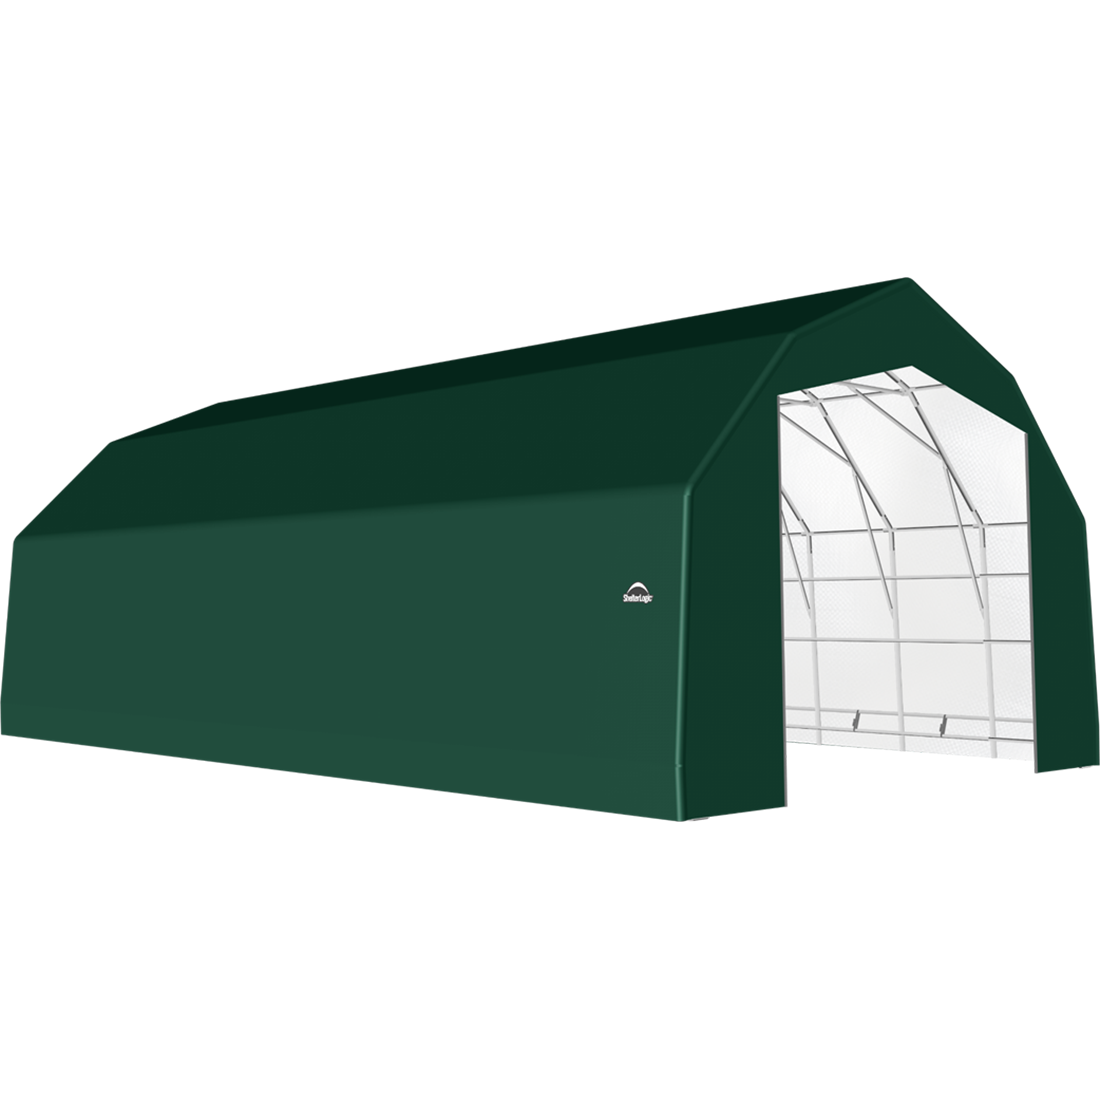 ShelterTech SP Series Barn Shelter, 25 ft. x 32 ft. x 17 ft. Heavy Duty PVC 14.5 oz. Green